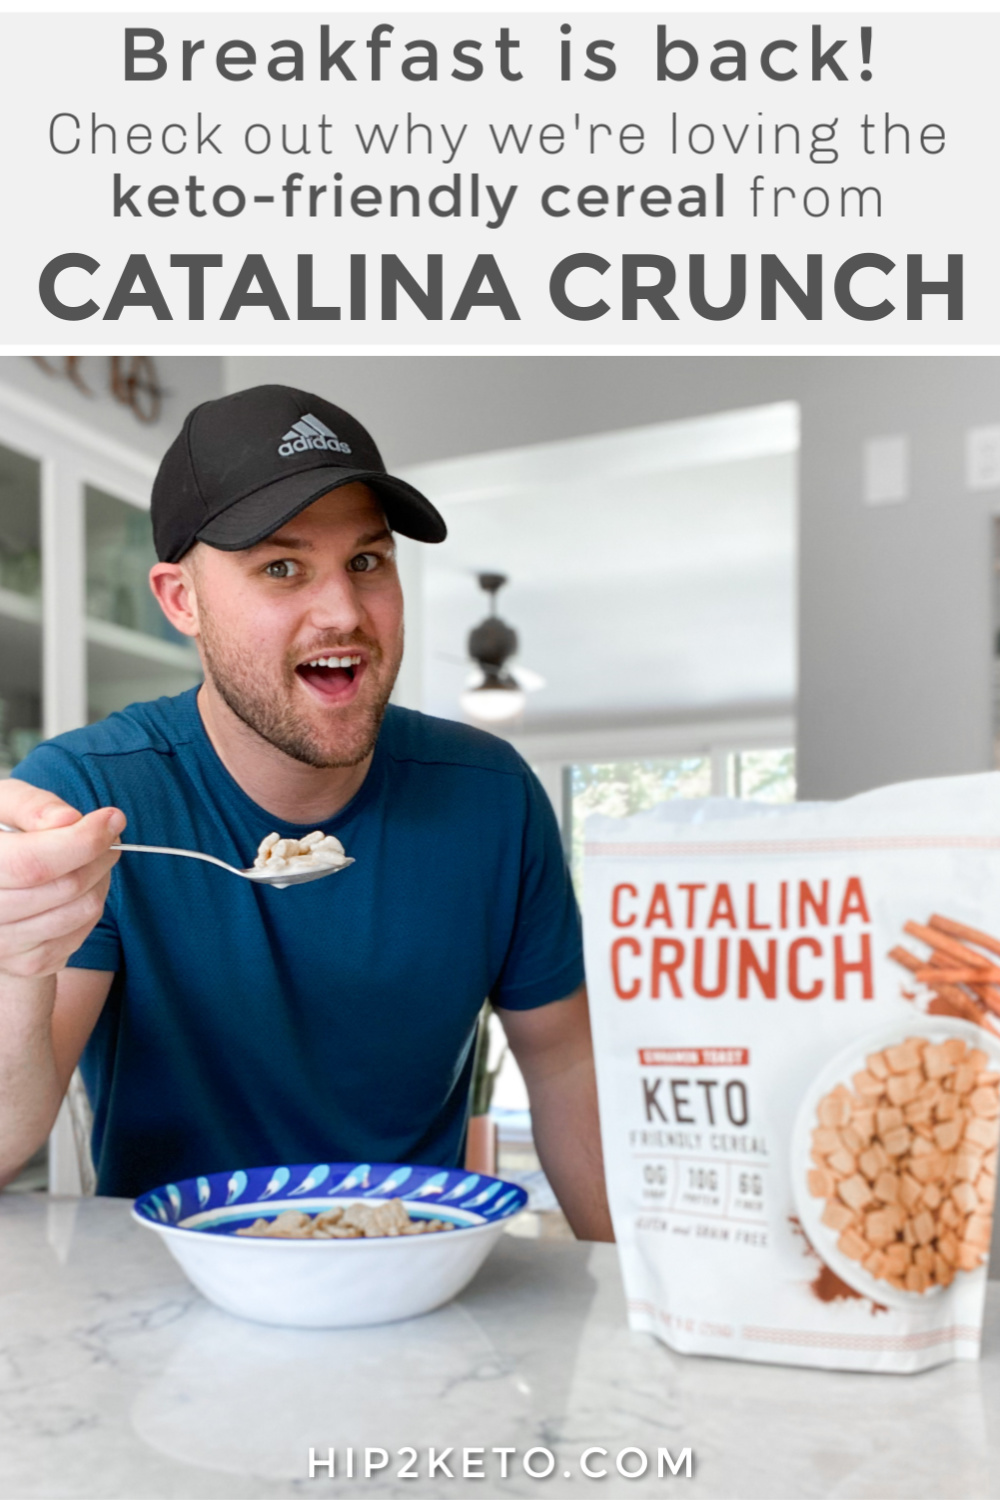 catalina crunch cereal canada